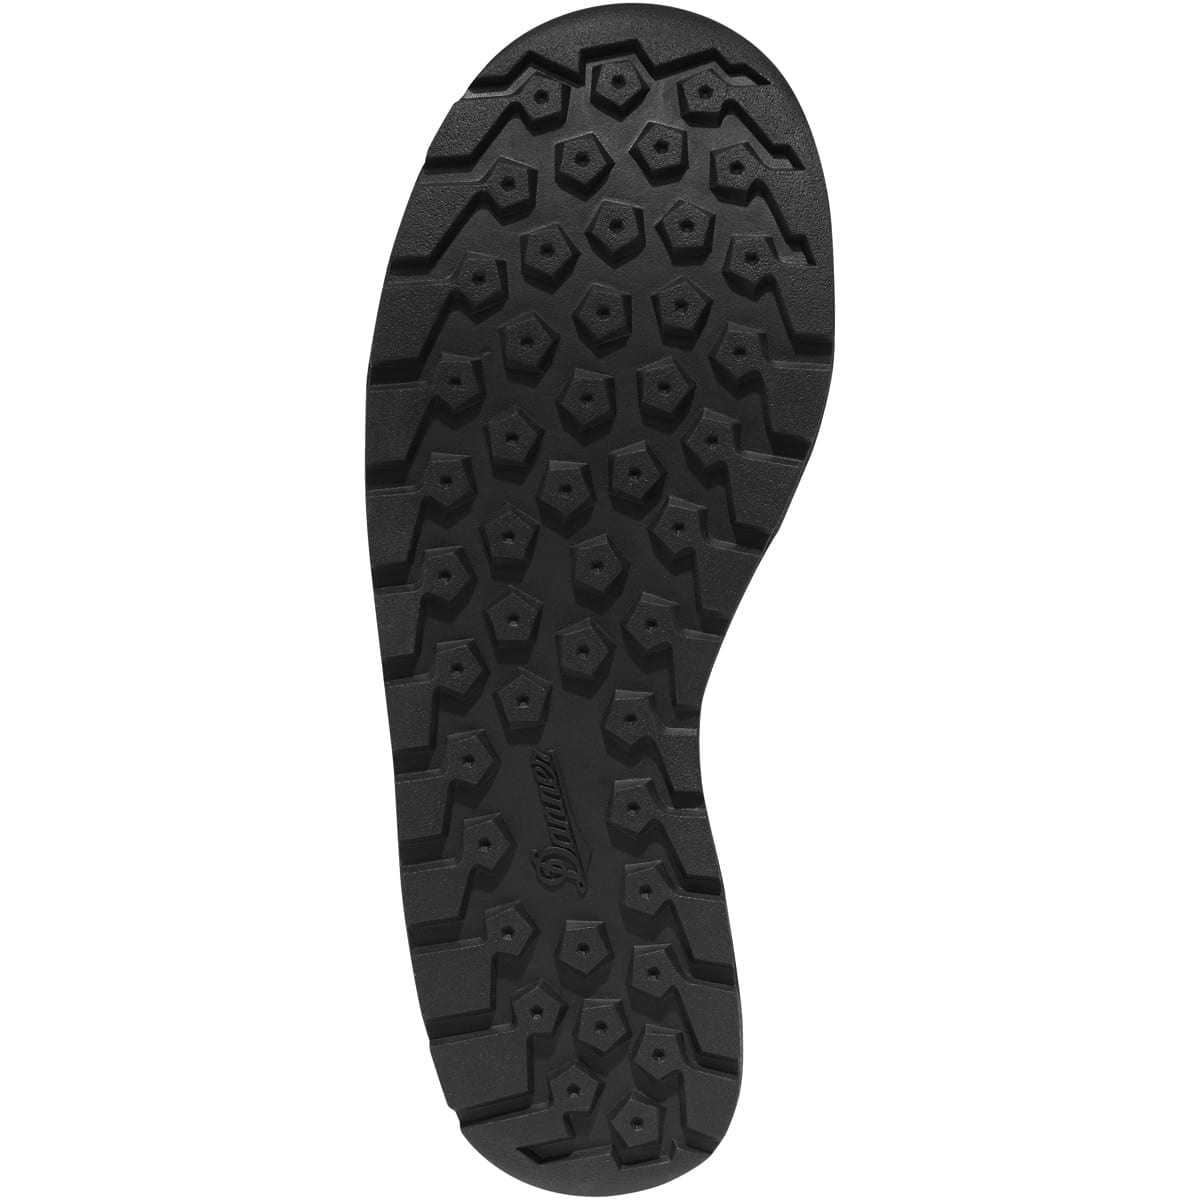 Danner Mens Tachyon Waterproof Boot, Black (50122) - COPS Products